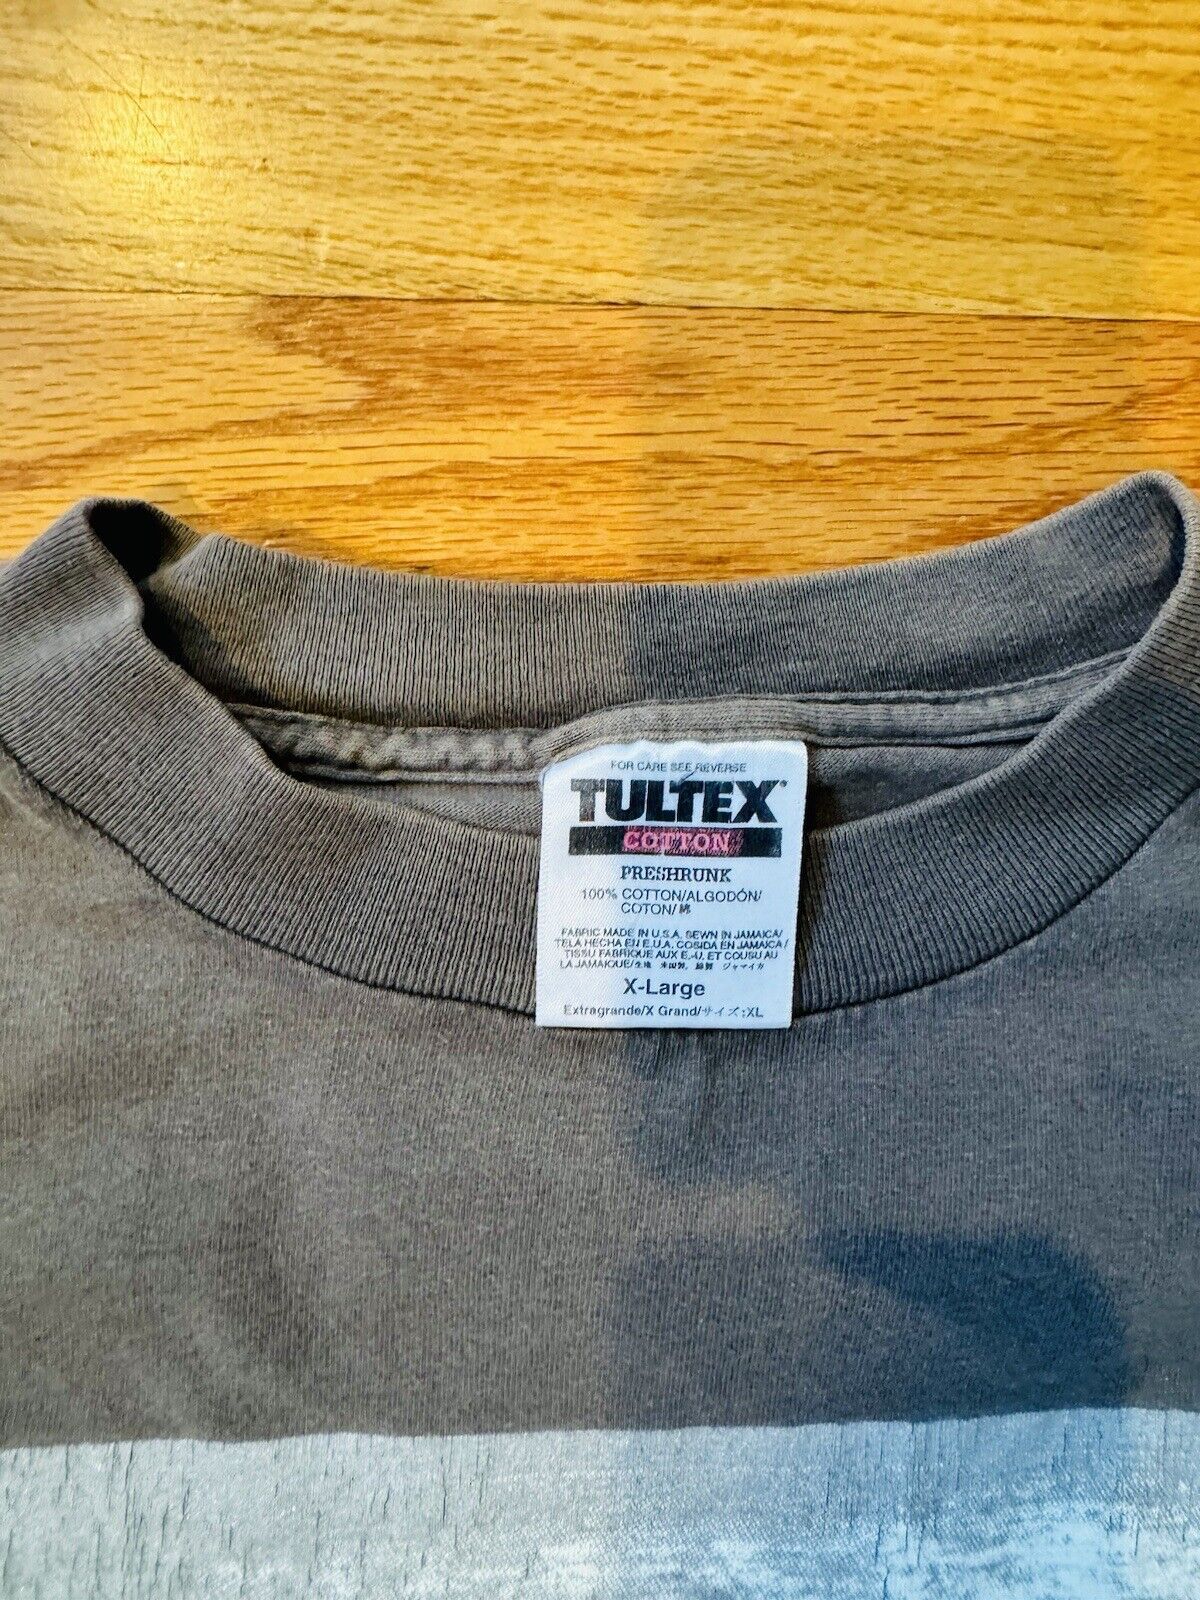 vintage Bush t shirt XL Razorblade Suitcase gray - image 3